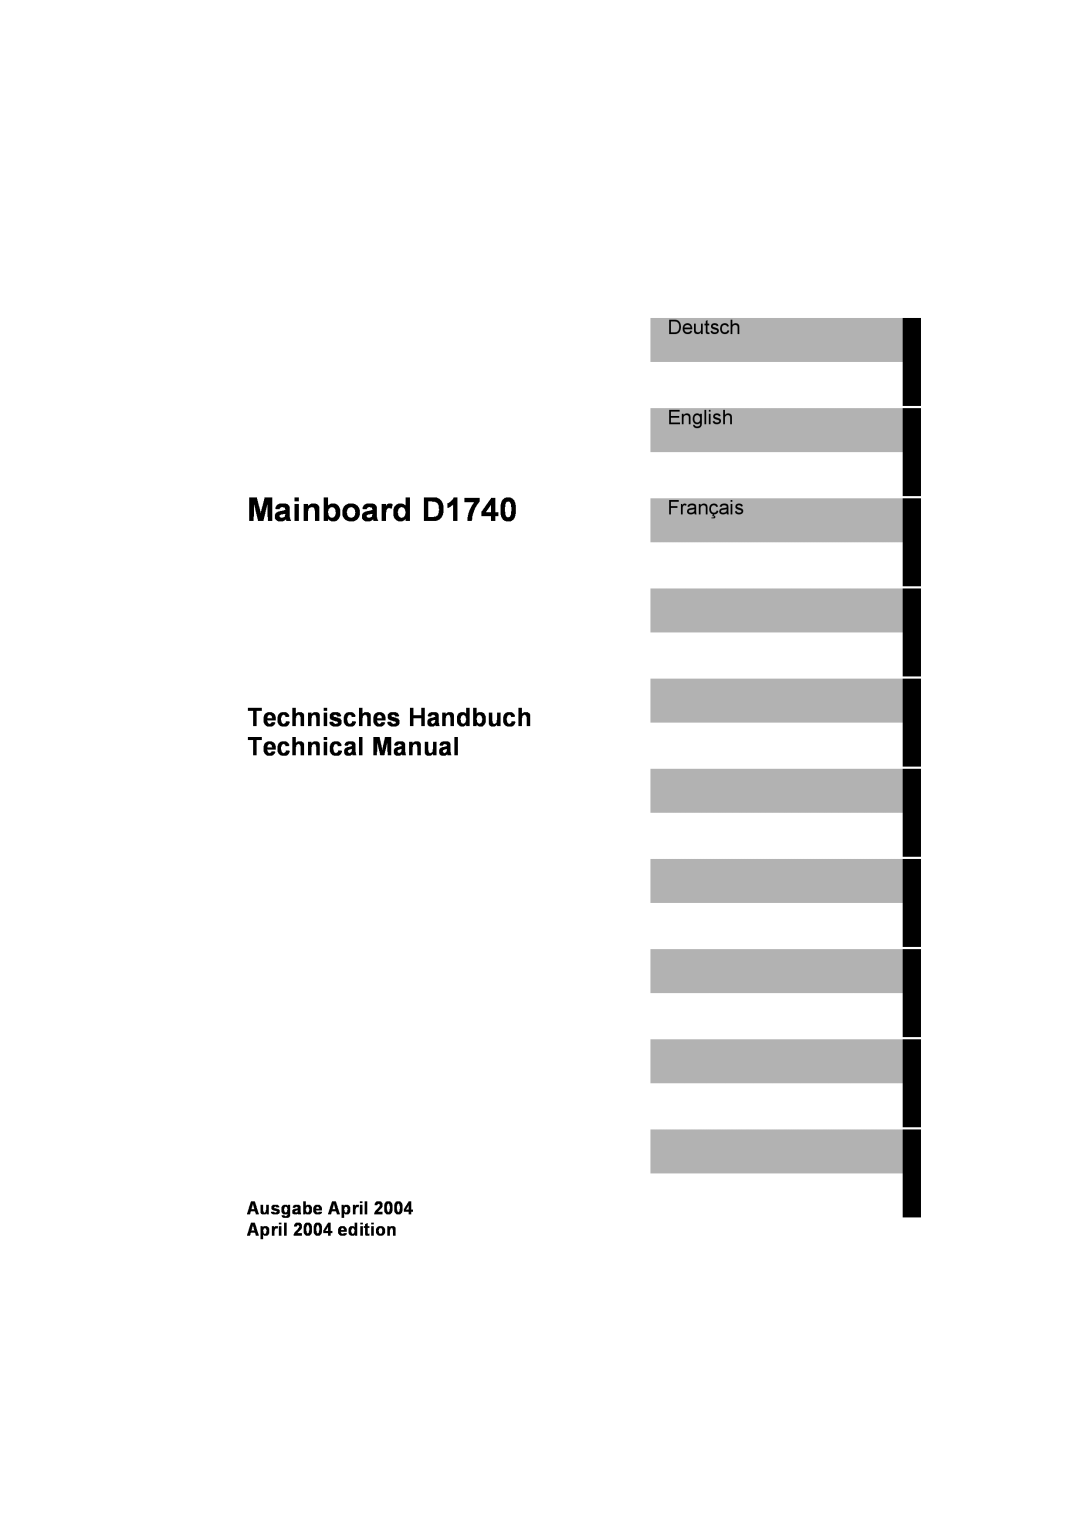 Fujitsu technical manual Mainboard D1740, Deutsch English Français, Ausgabe April 2004 April 2004 edition 